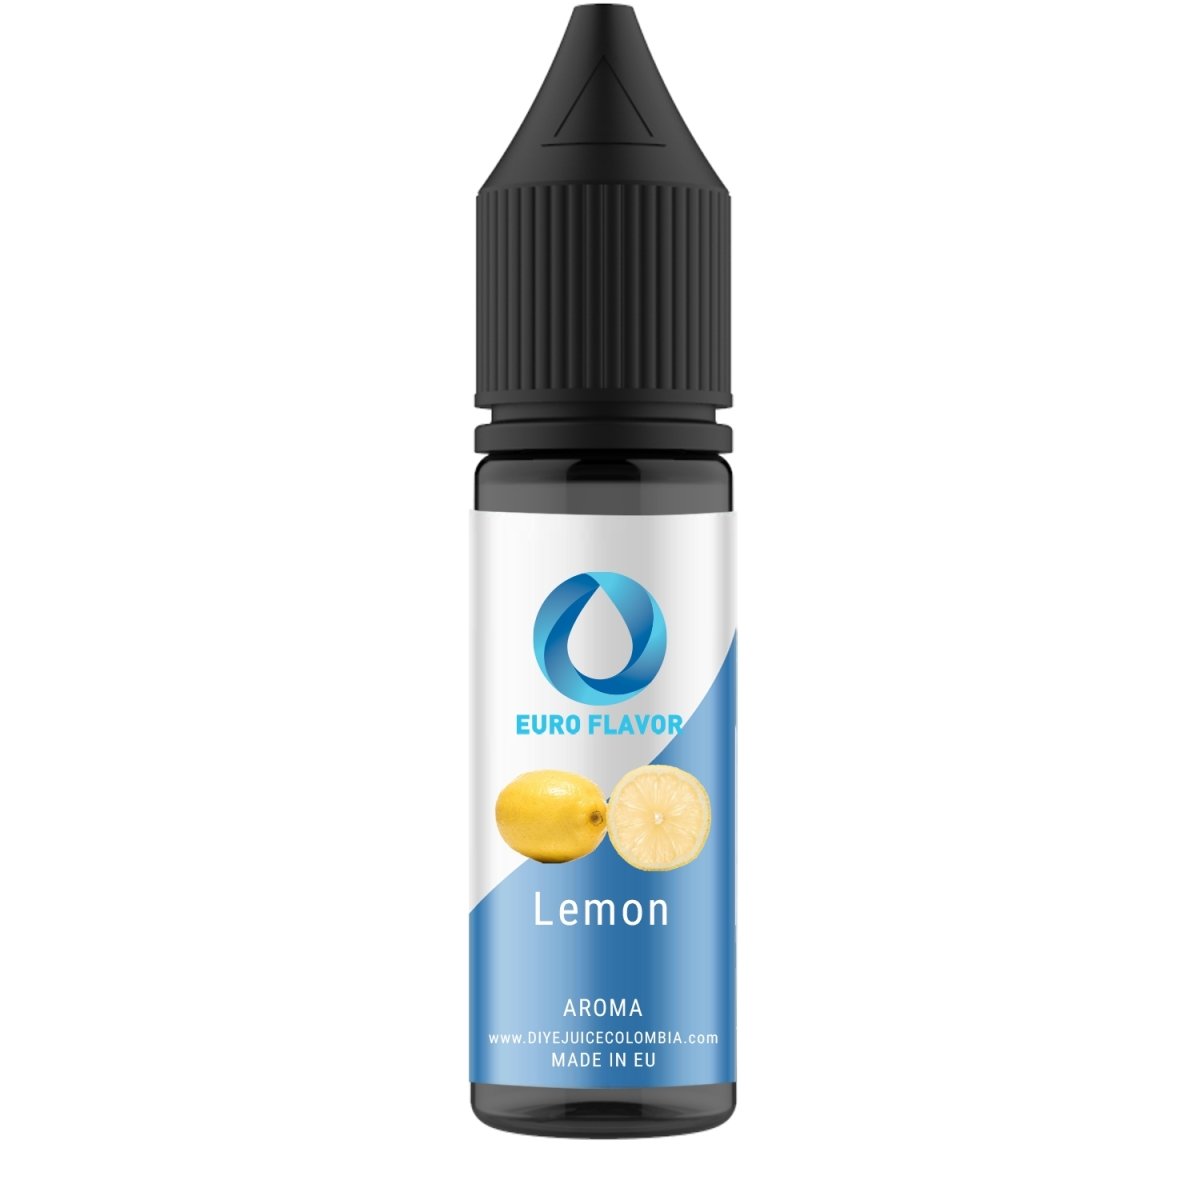 Lemon EF 16.5 ml - Euro Flavor - DIY EJUICE COLOMBIA